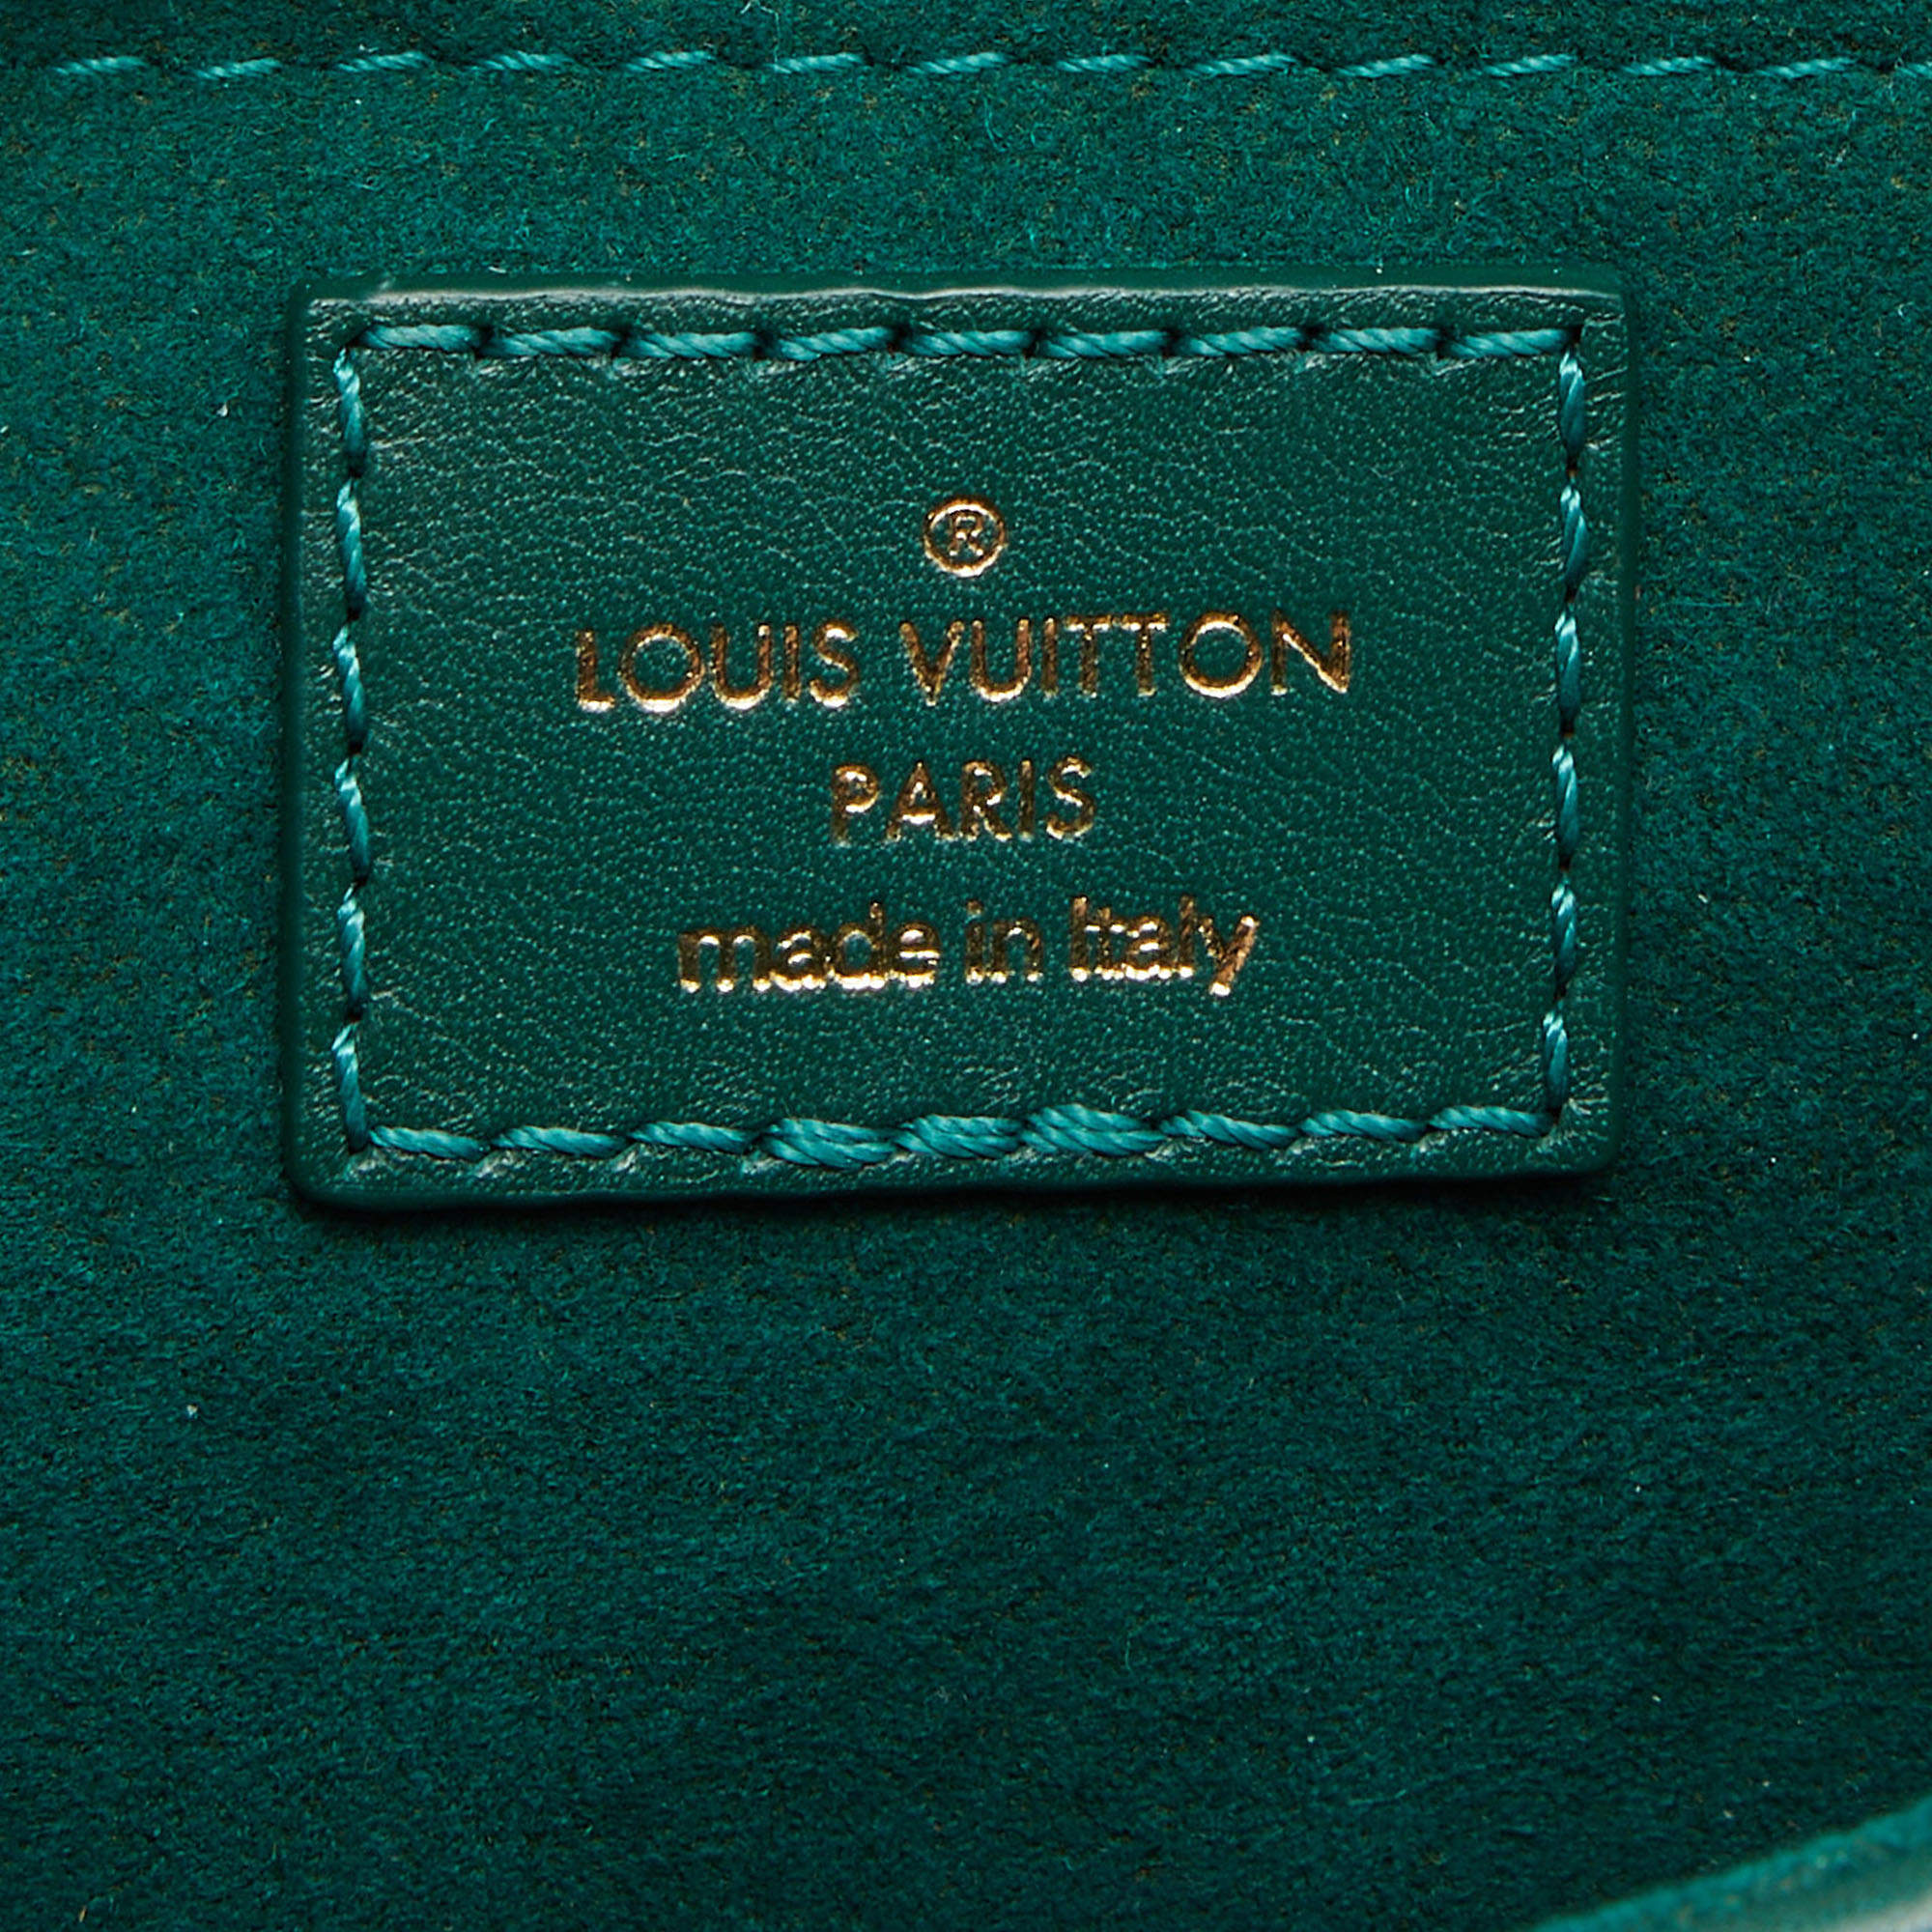 Louis Vuitton, Bags, Green Louis Vuitton Bag